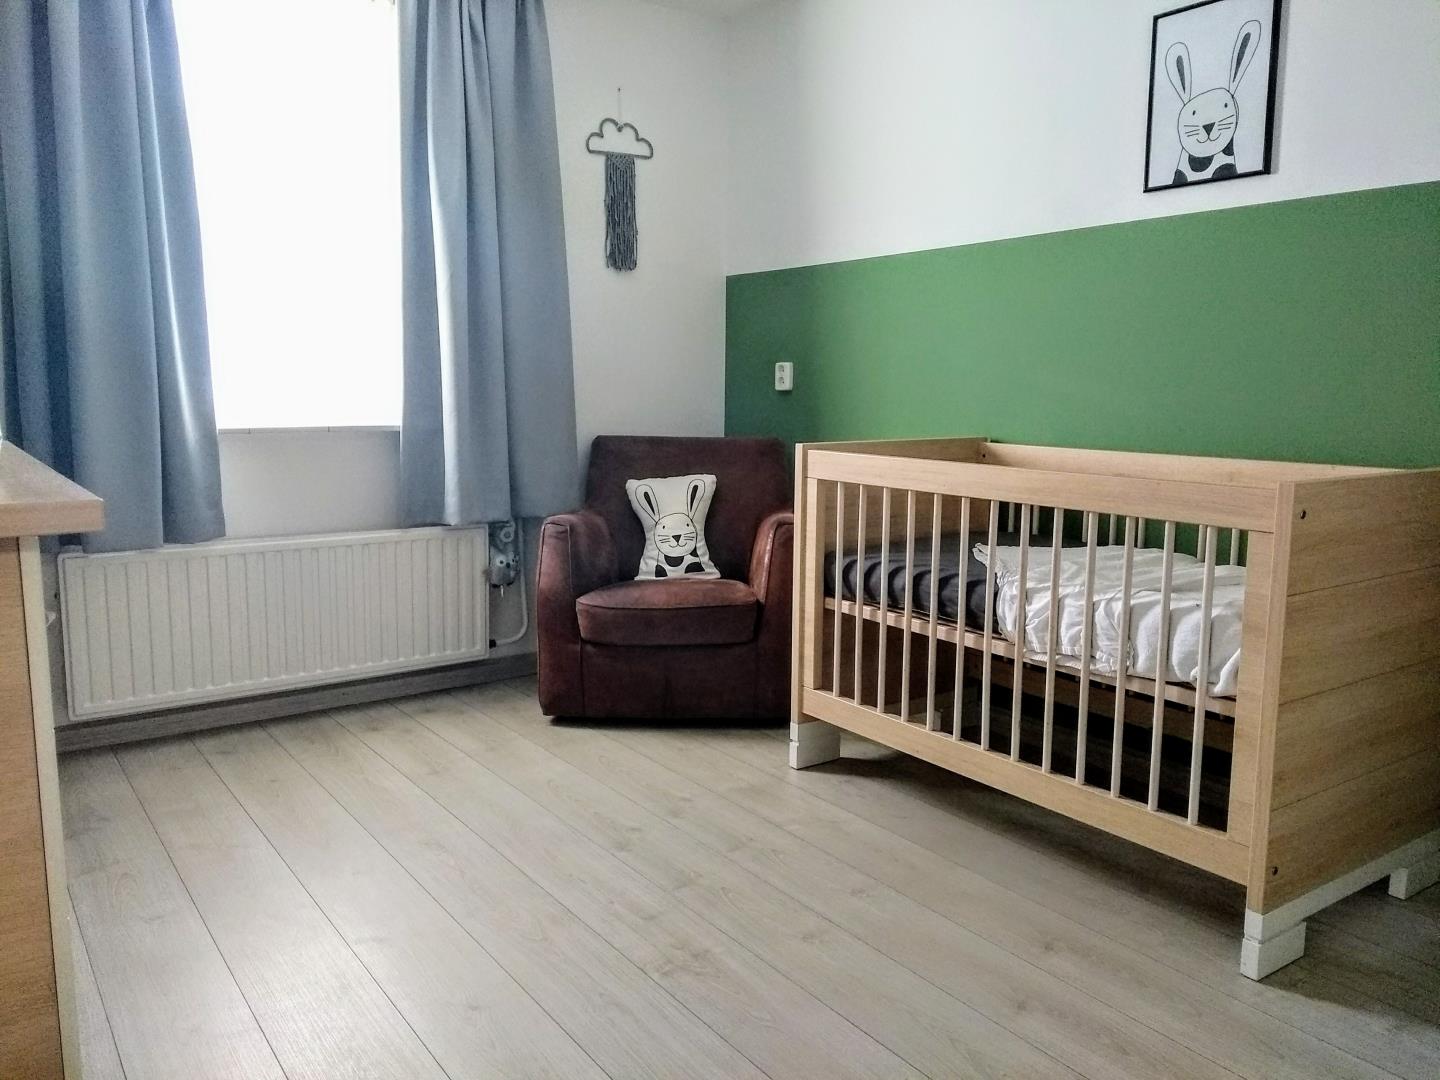 interieur, kinderkamer, kinderkamers, nieuwe kamers, klussen, verbouwen, mamablog, babykamer, mamalifestyle, lalog.nl